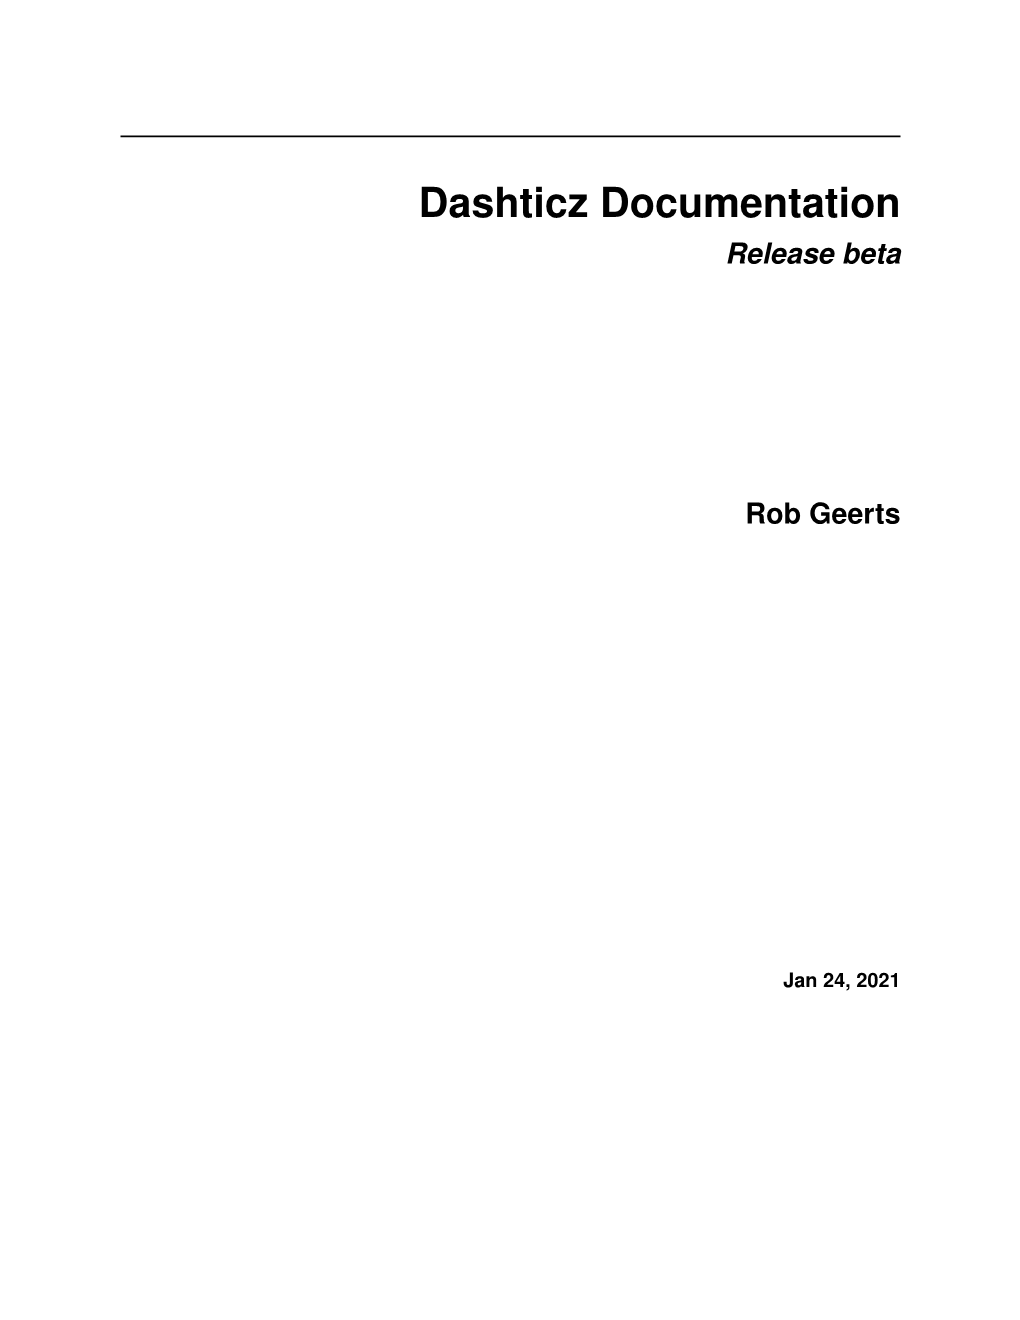 Dashticz Documentation Release Beta Rob Geerts